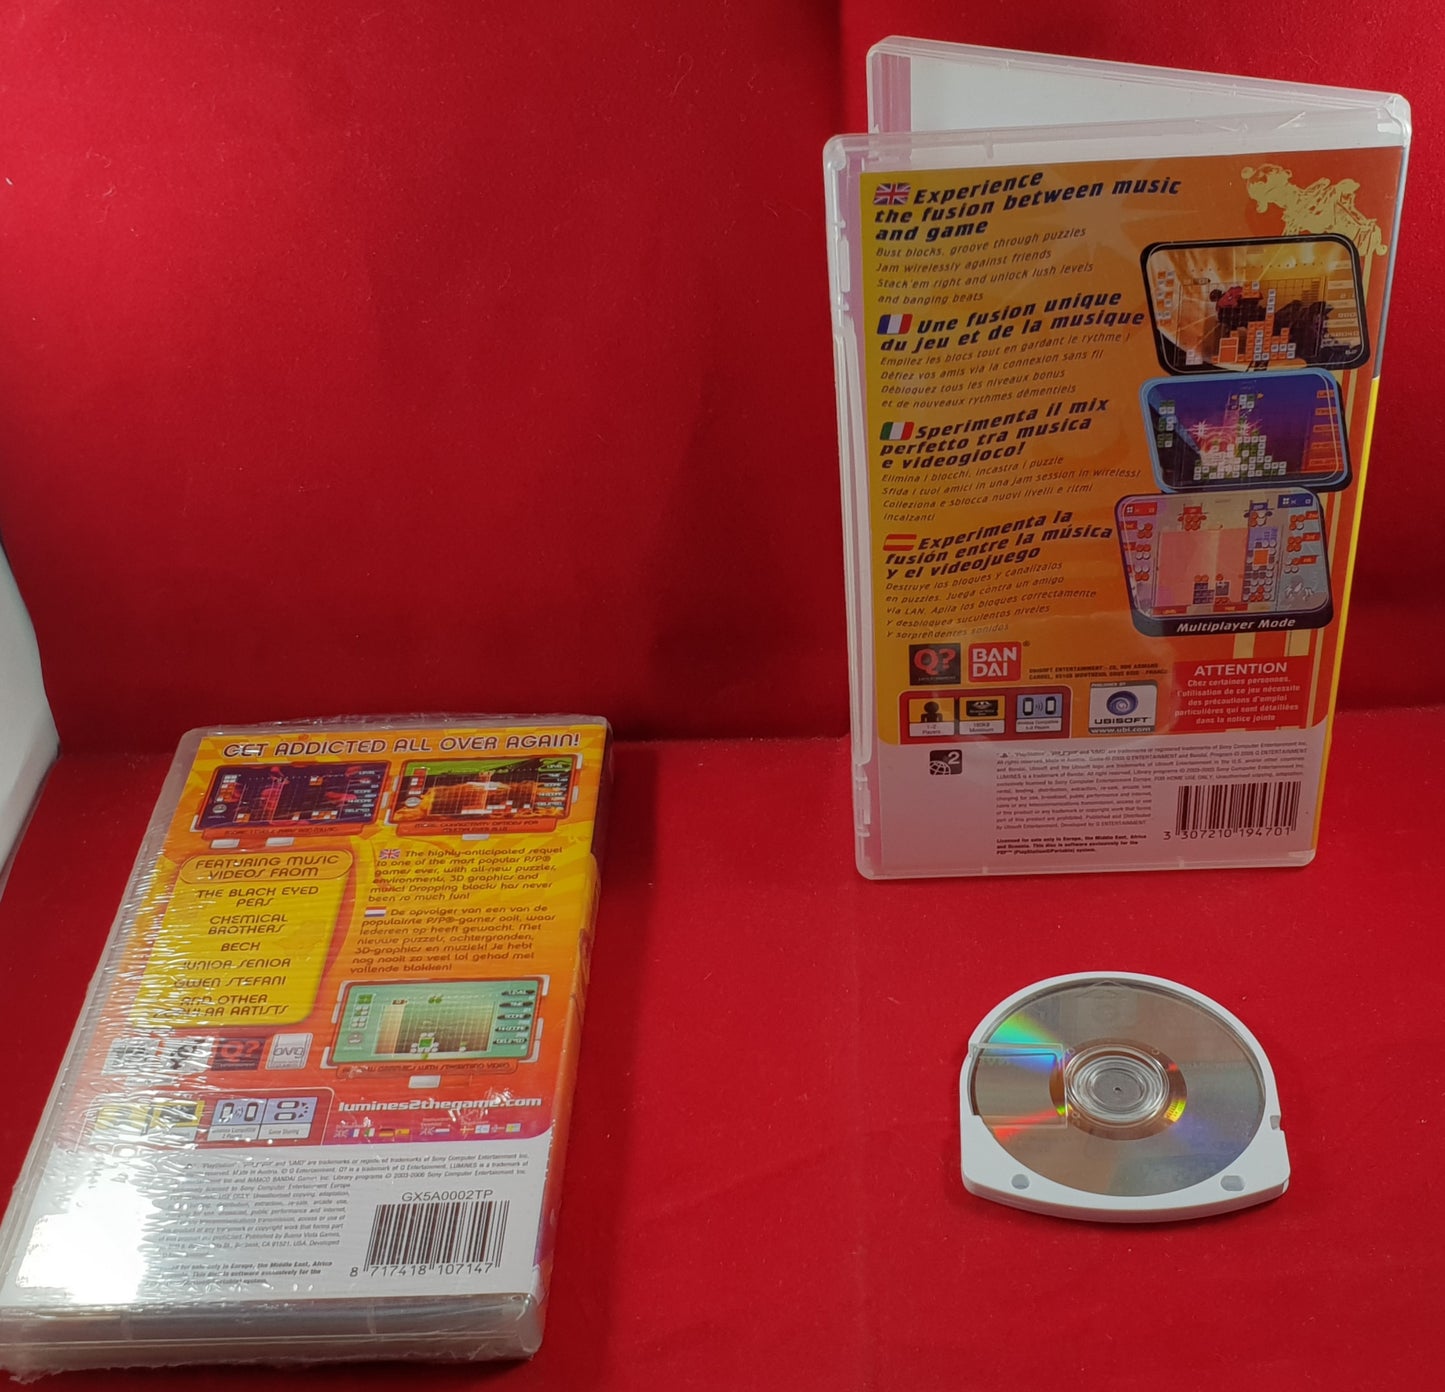 Lumines 1 & 2 Sony PSP Game Bundle